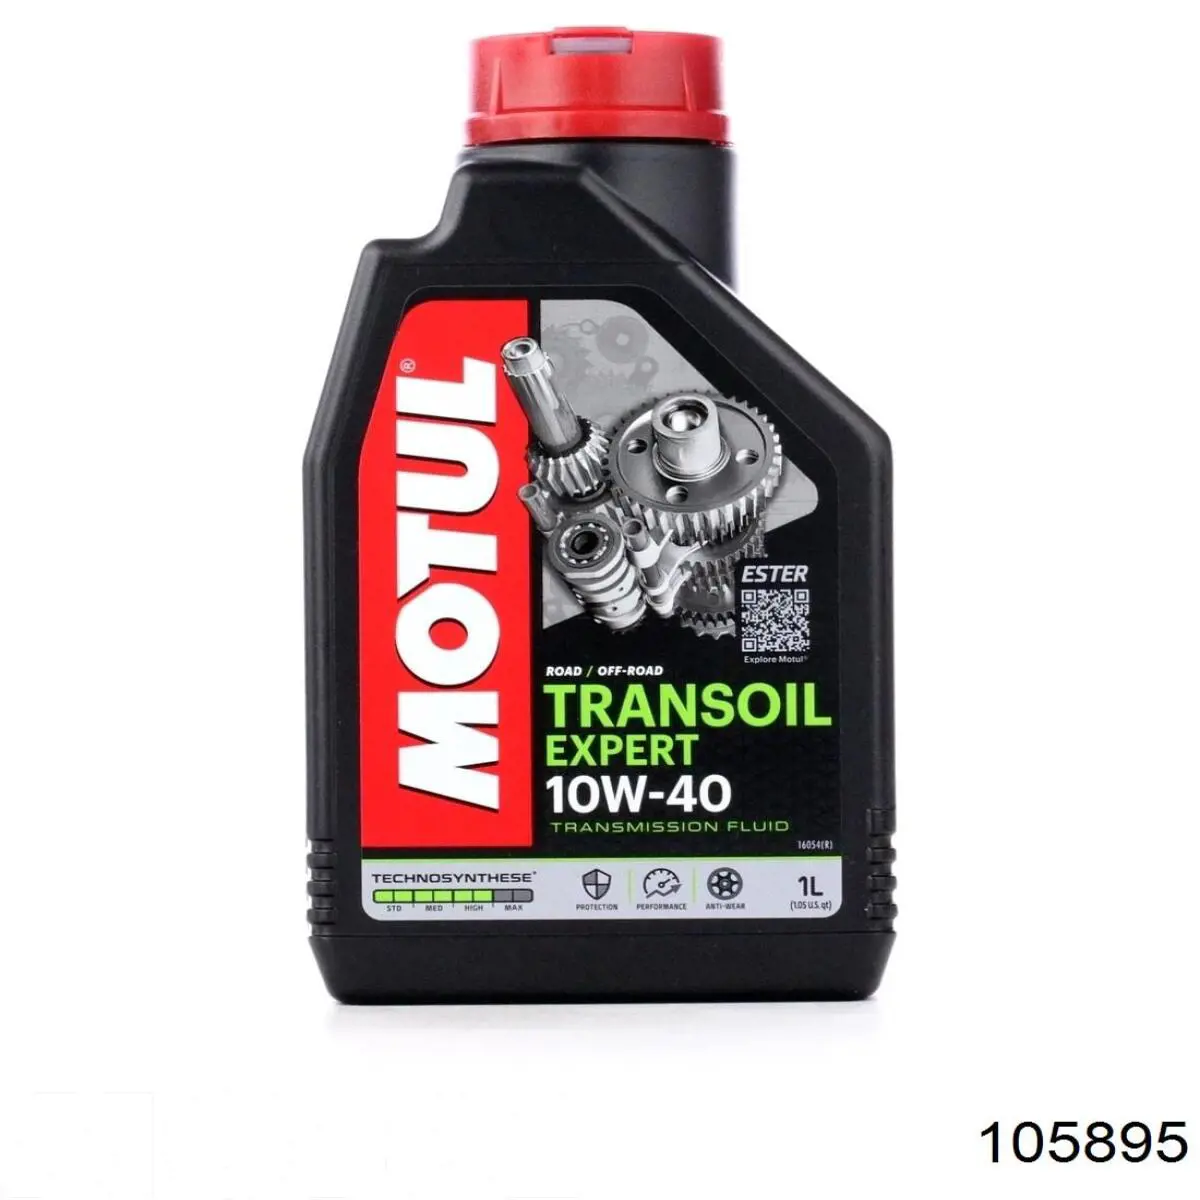  Масло трансмиссионное Motul Transoil Expert 10W-40 GL-4 1 л (105895)